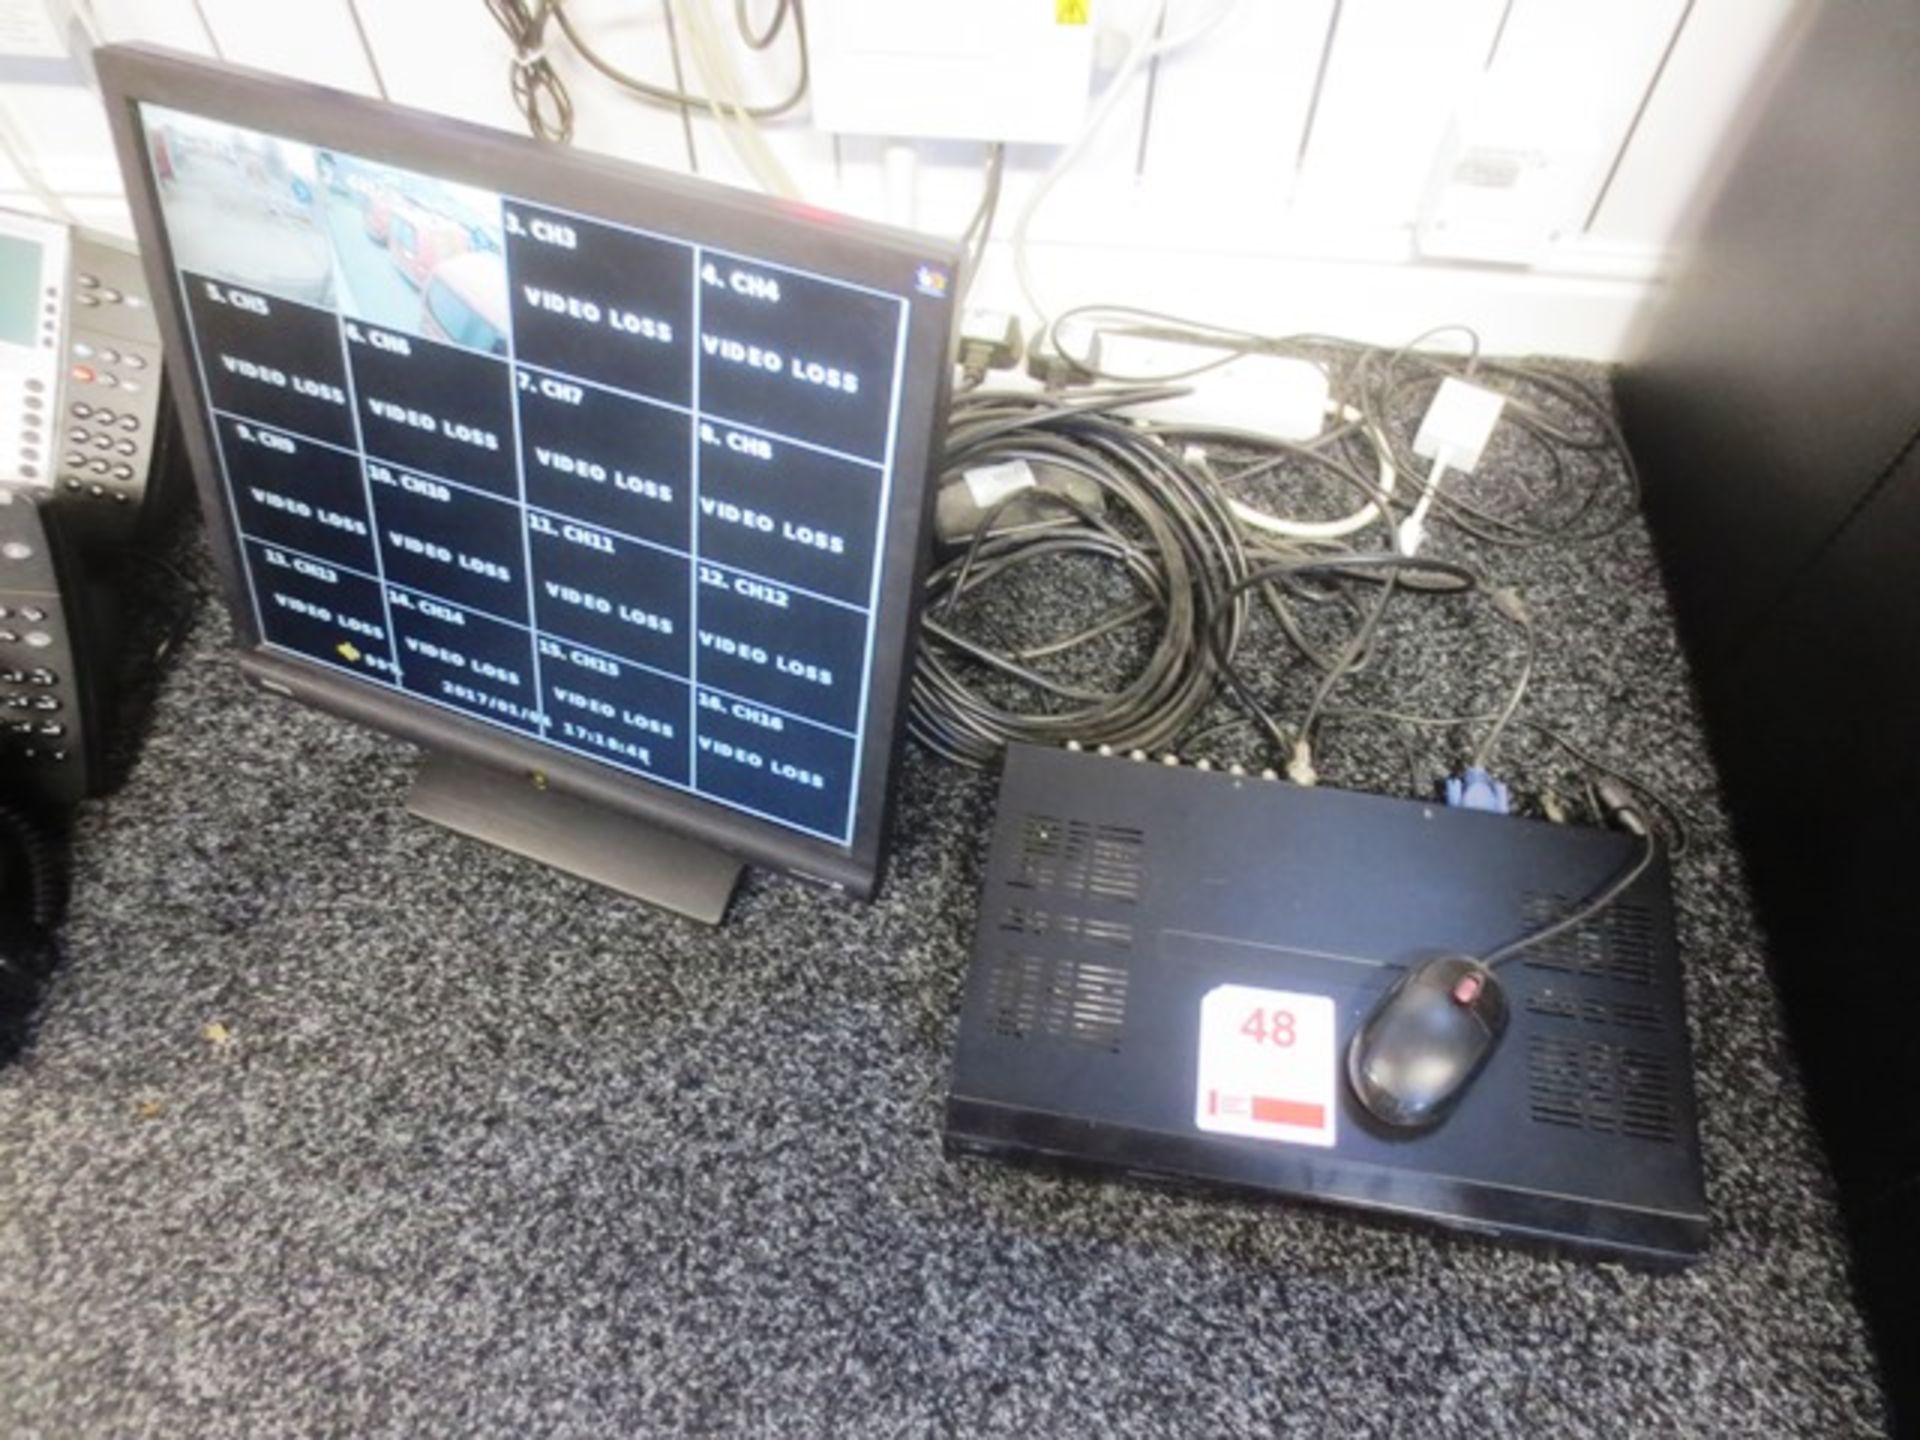 Ultra SR101 6U digital video recorder and Benq monitor